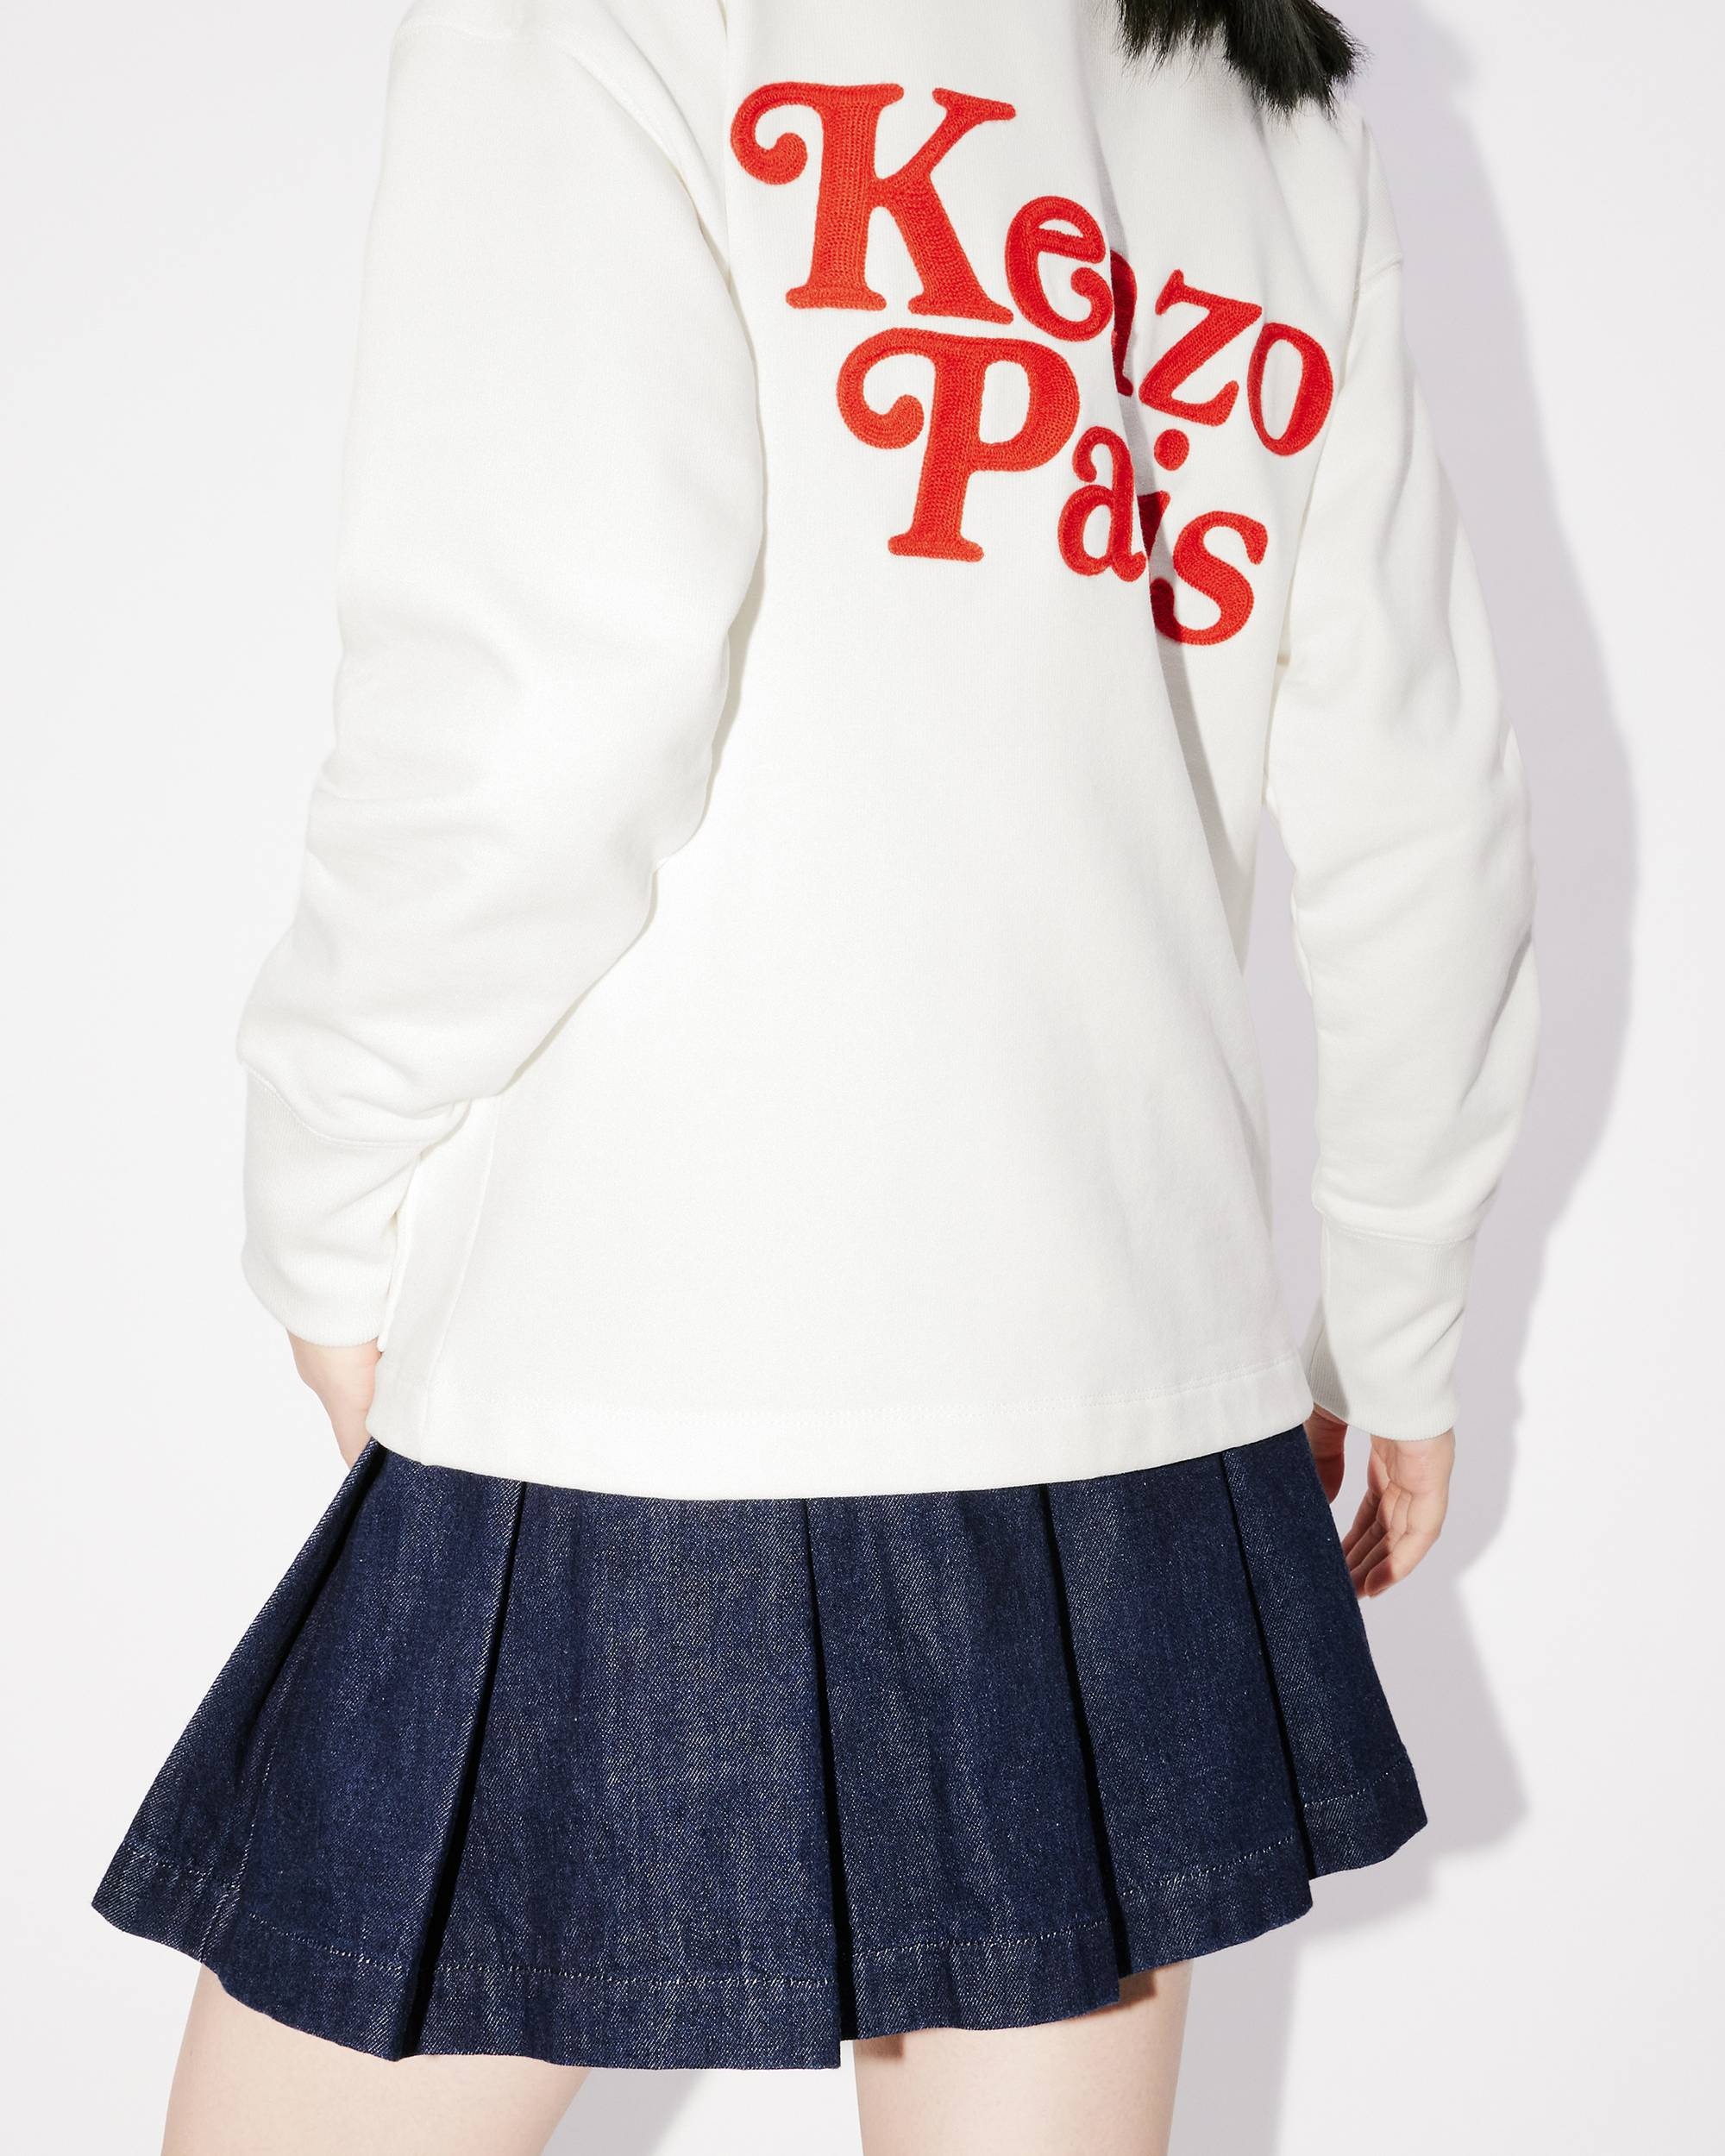 'KENZO by Verdy' embroidered sweatshirt cardigan - 7